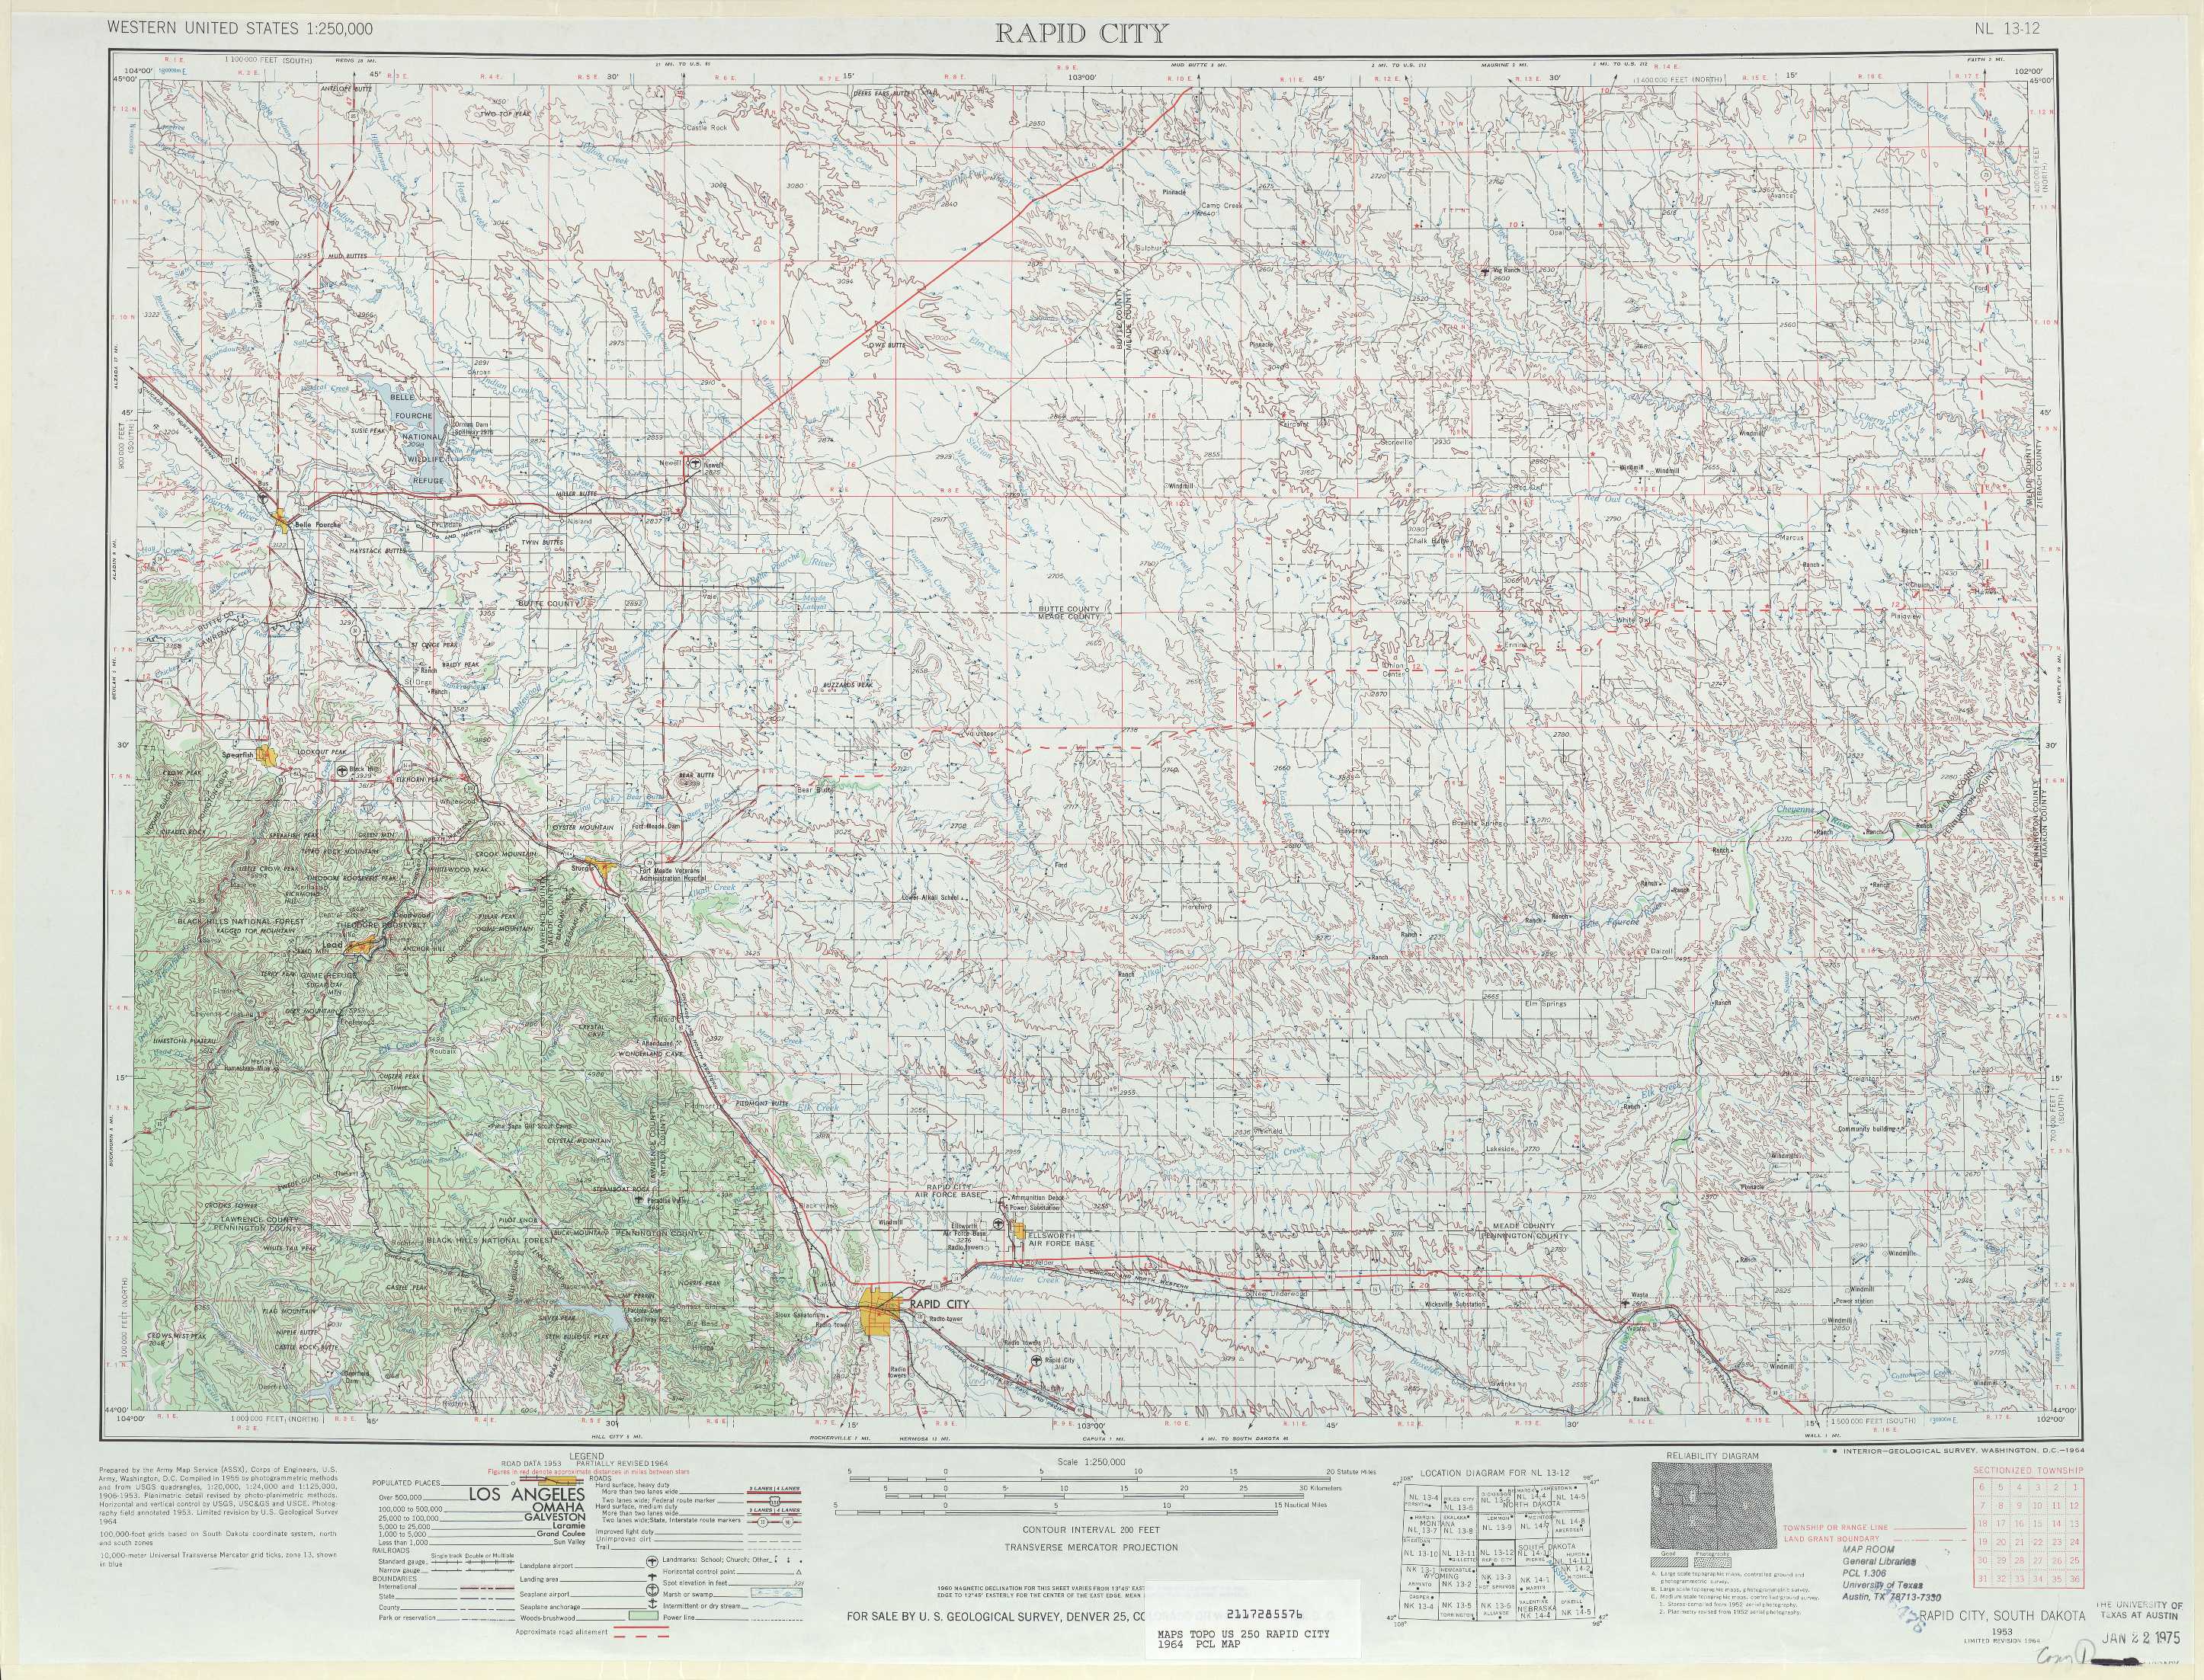 Rapid City topographic map, SD - USGS Topo 1:250,000 scale